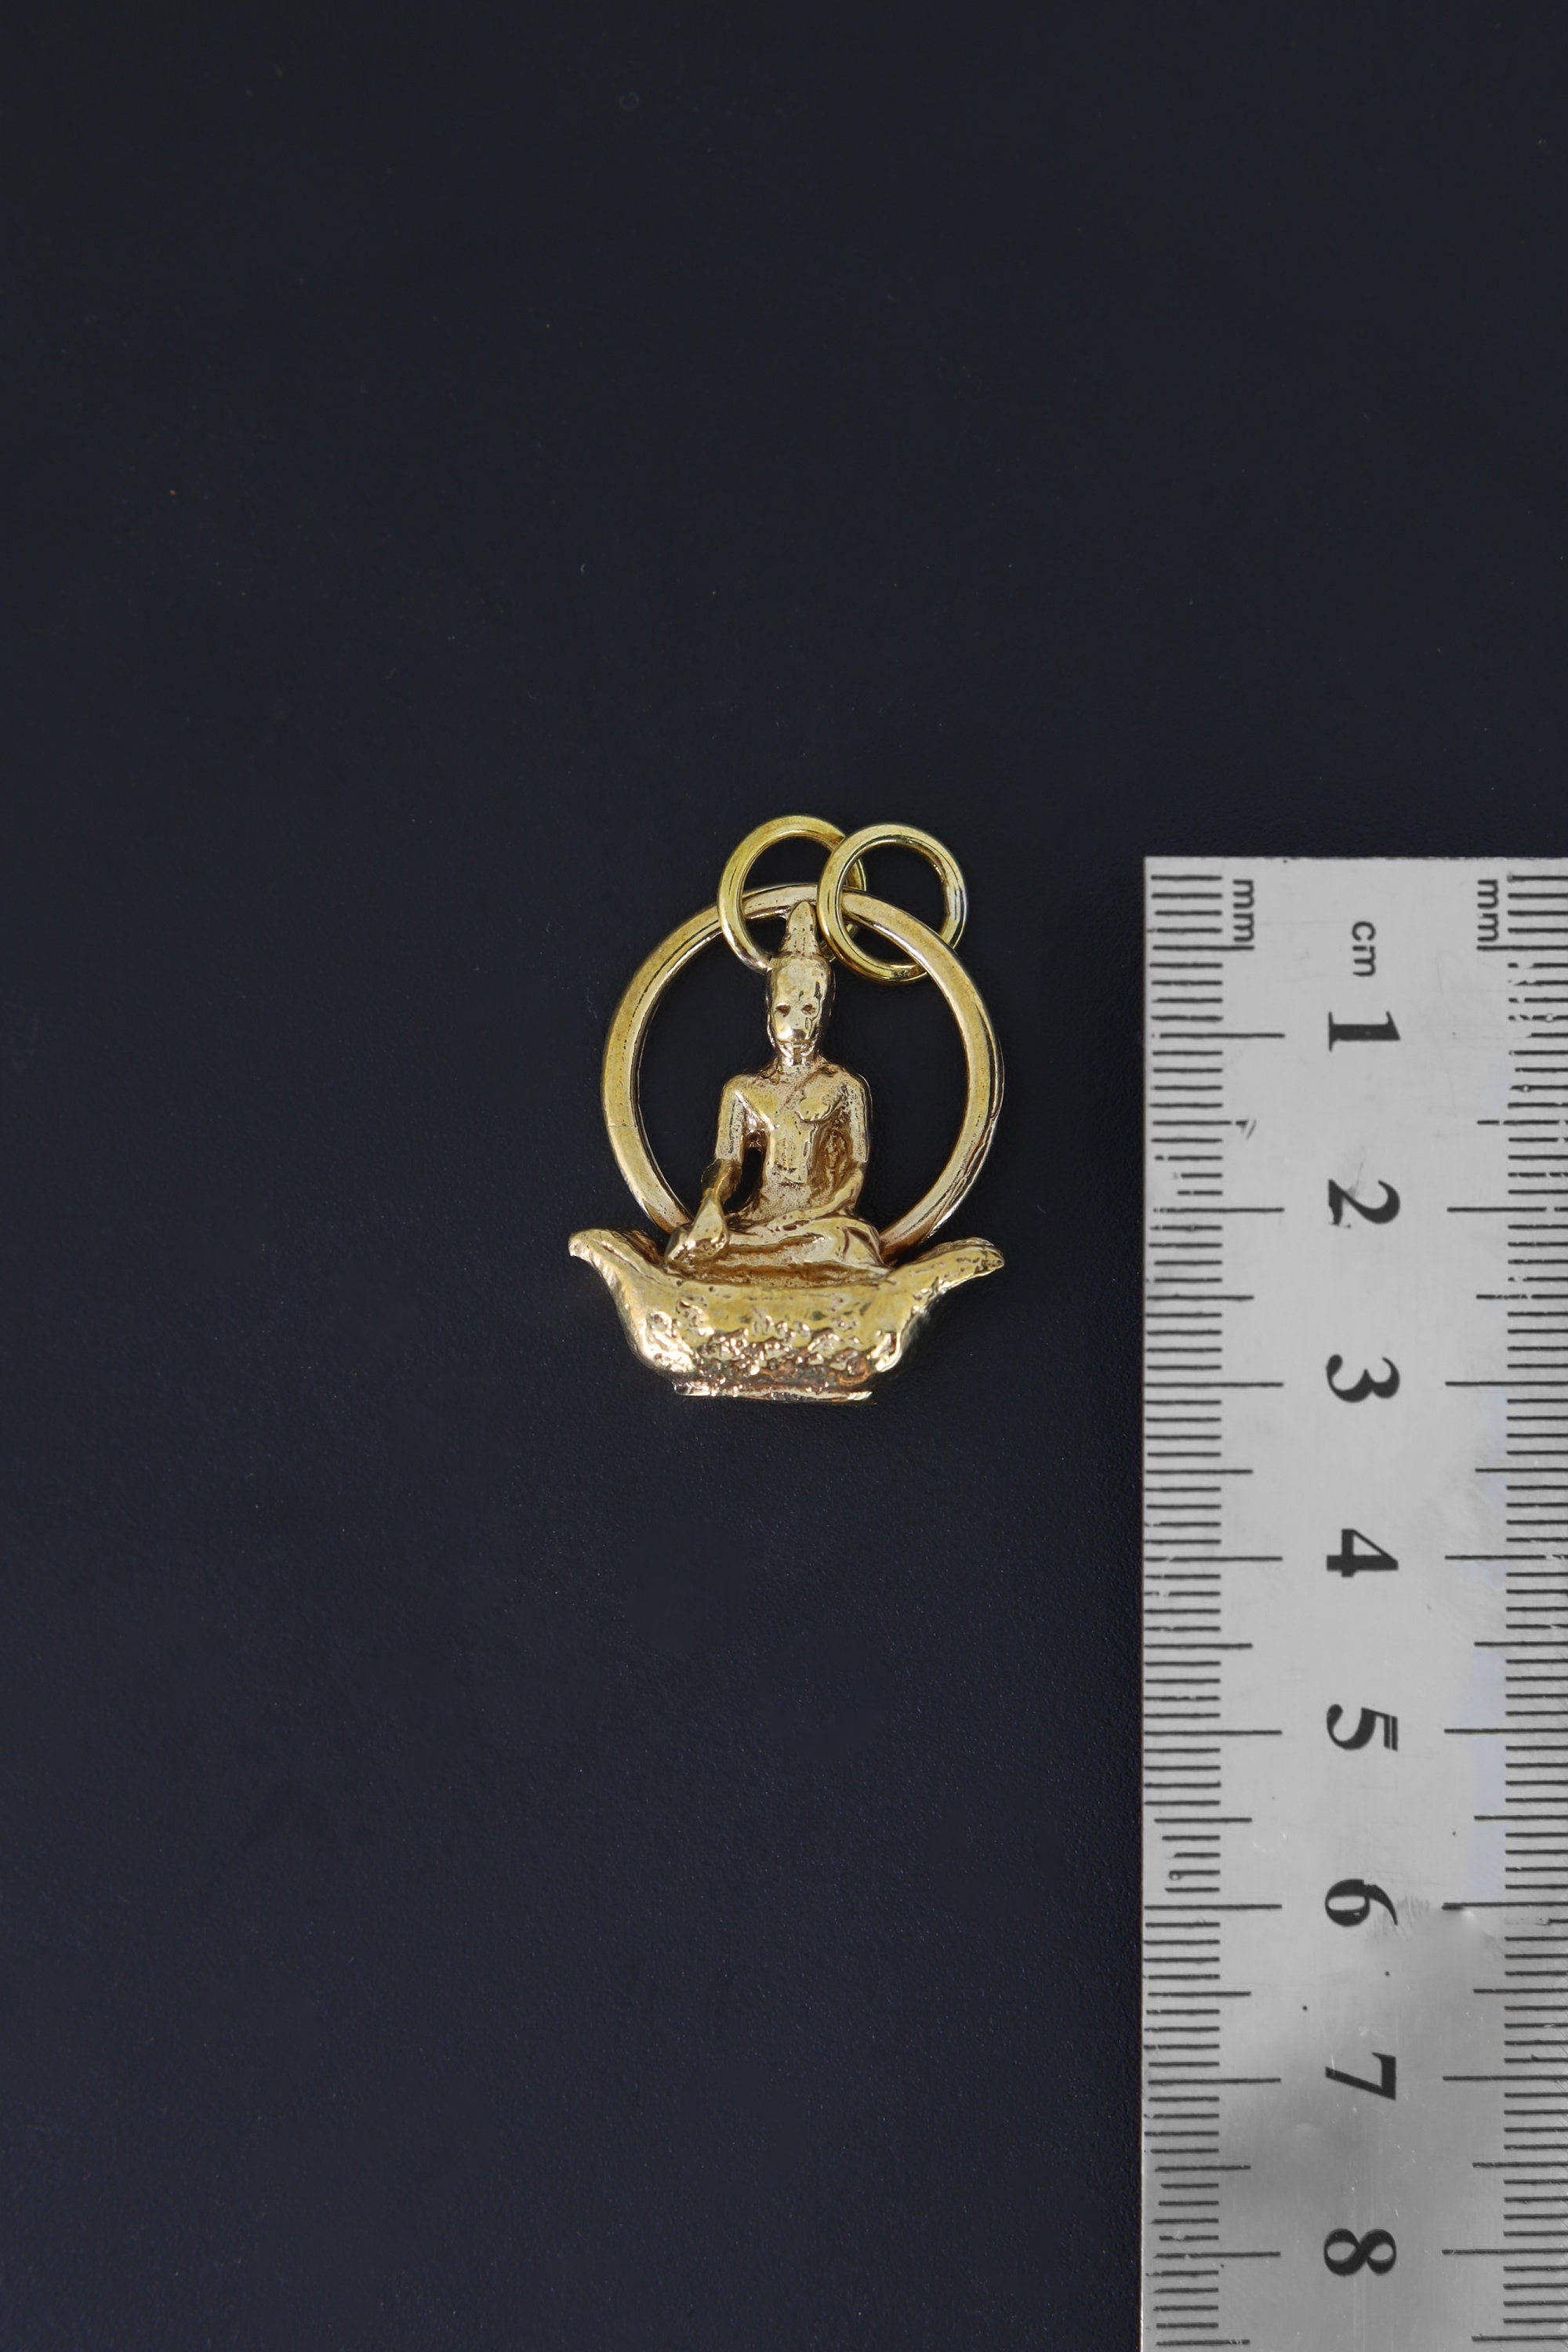 Cast Pendant with Buddha Sitting on Boat Talisman, Gold Plated Brass Charm, Inner Peace & Prosperity, Buddhist Spiritual Jewelry